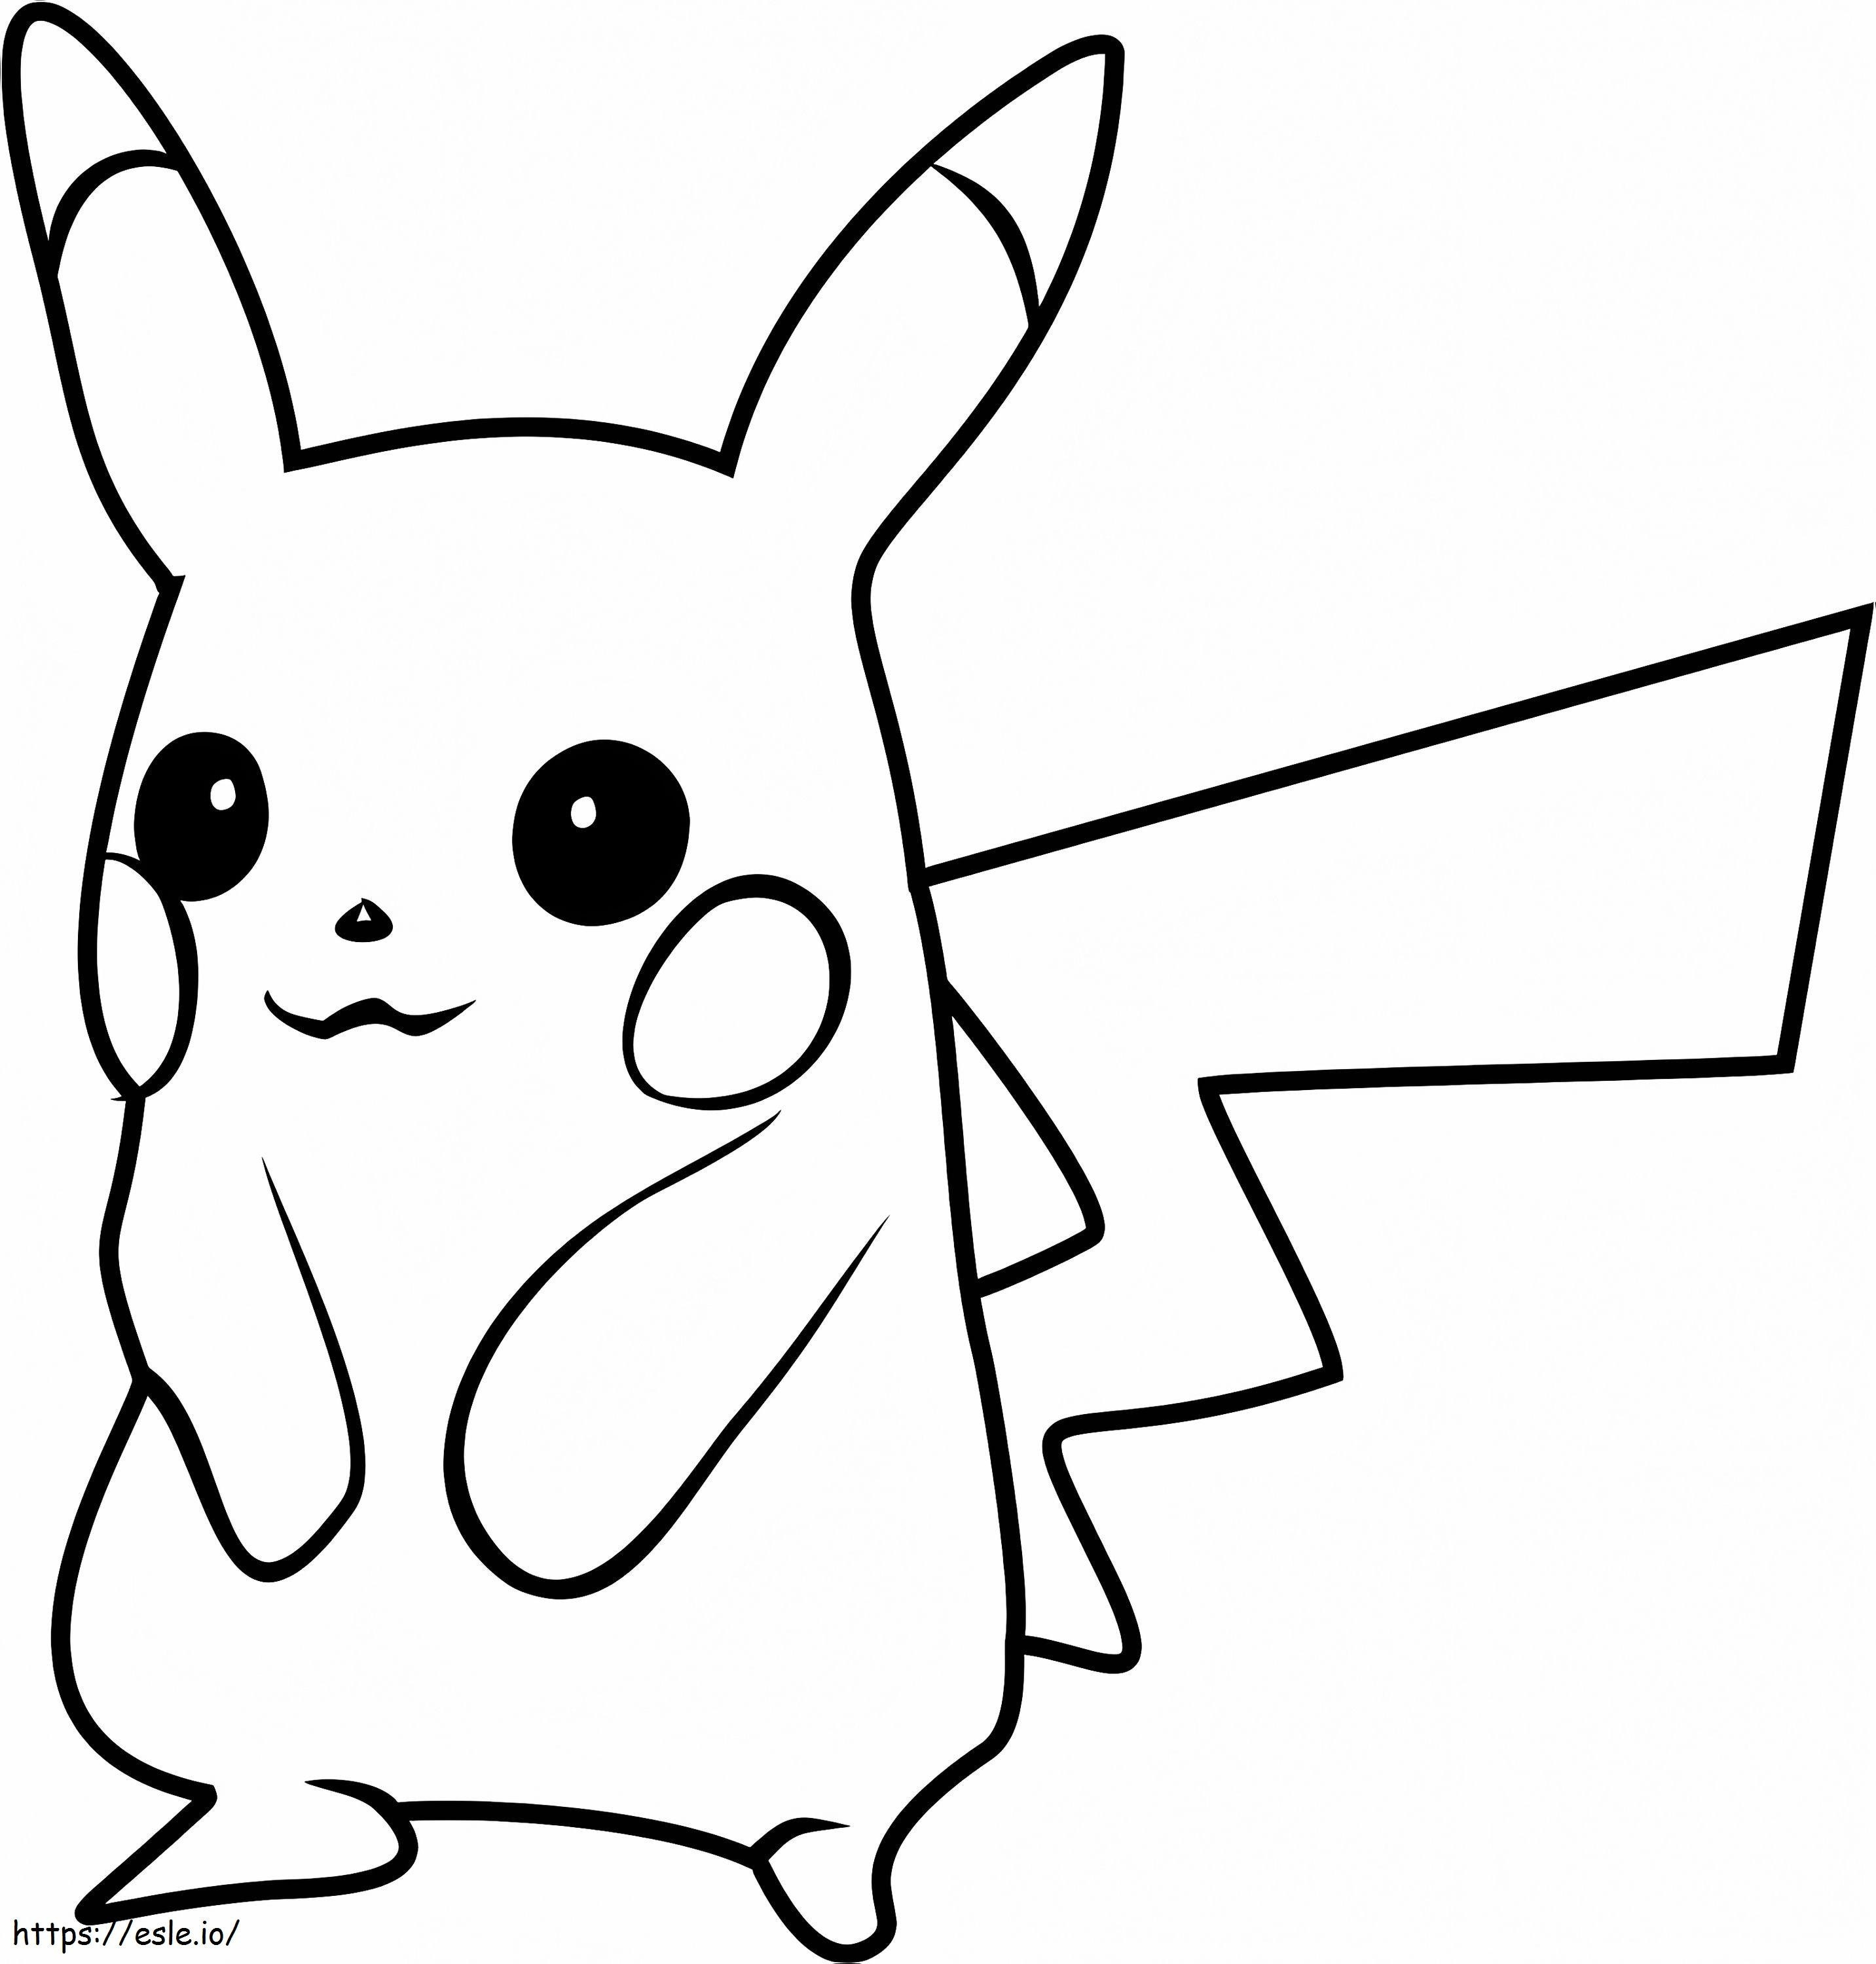  Pikachu Pokemon Go A4 ausmalbilder